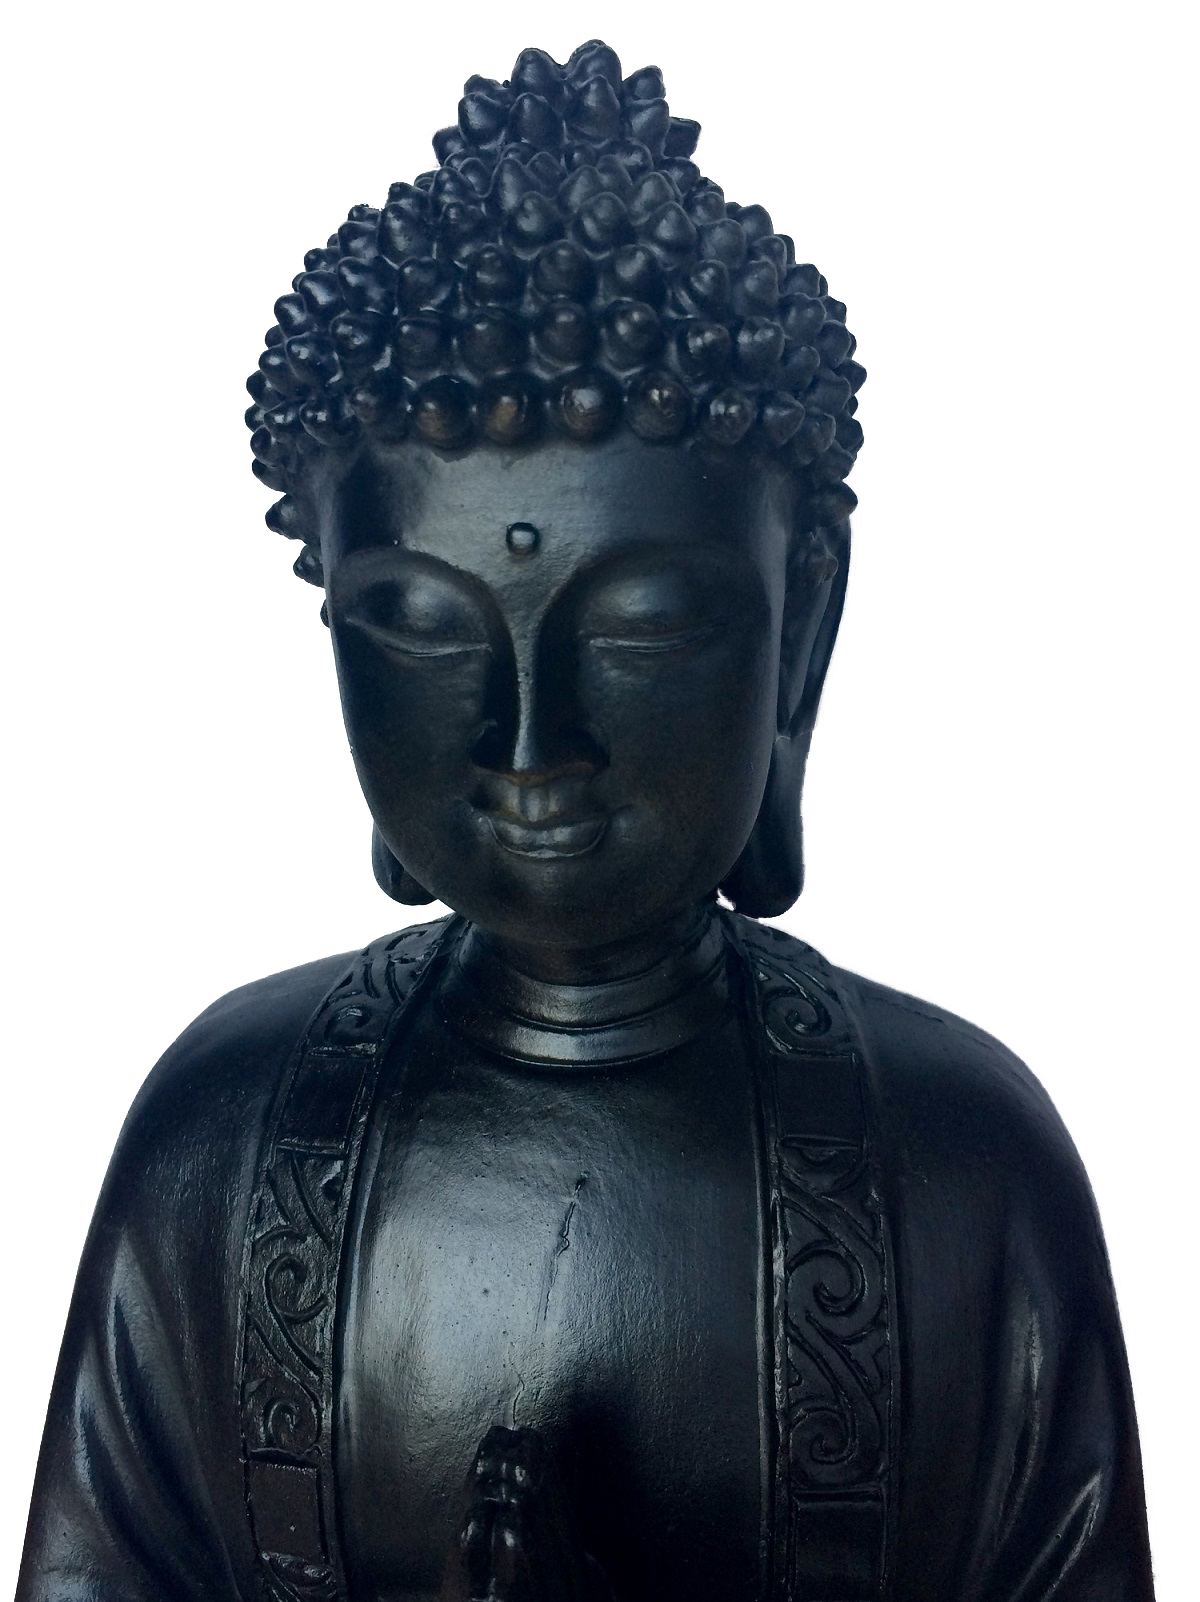 grand-bouddha-noir-en-meditation-pei-17778-sgrbnoir-1496506437